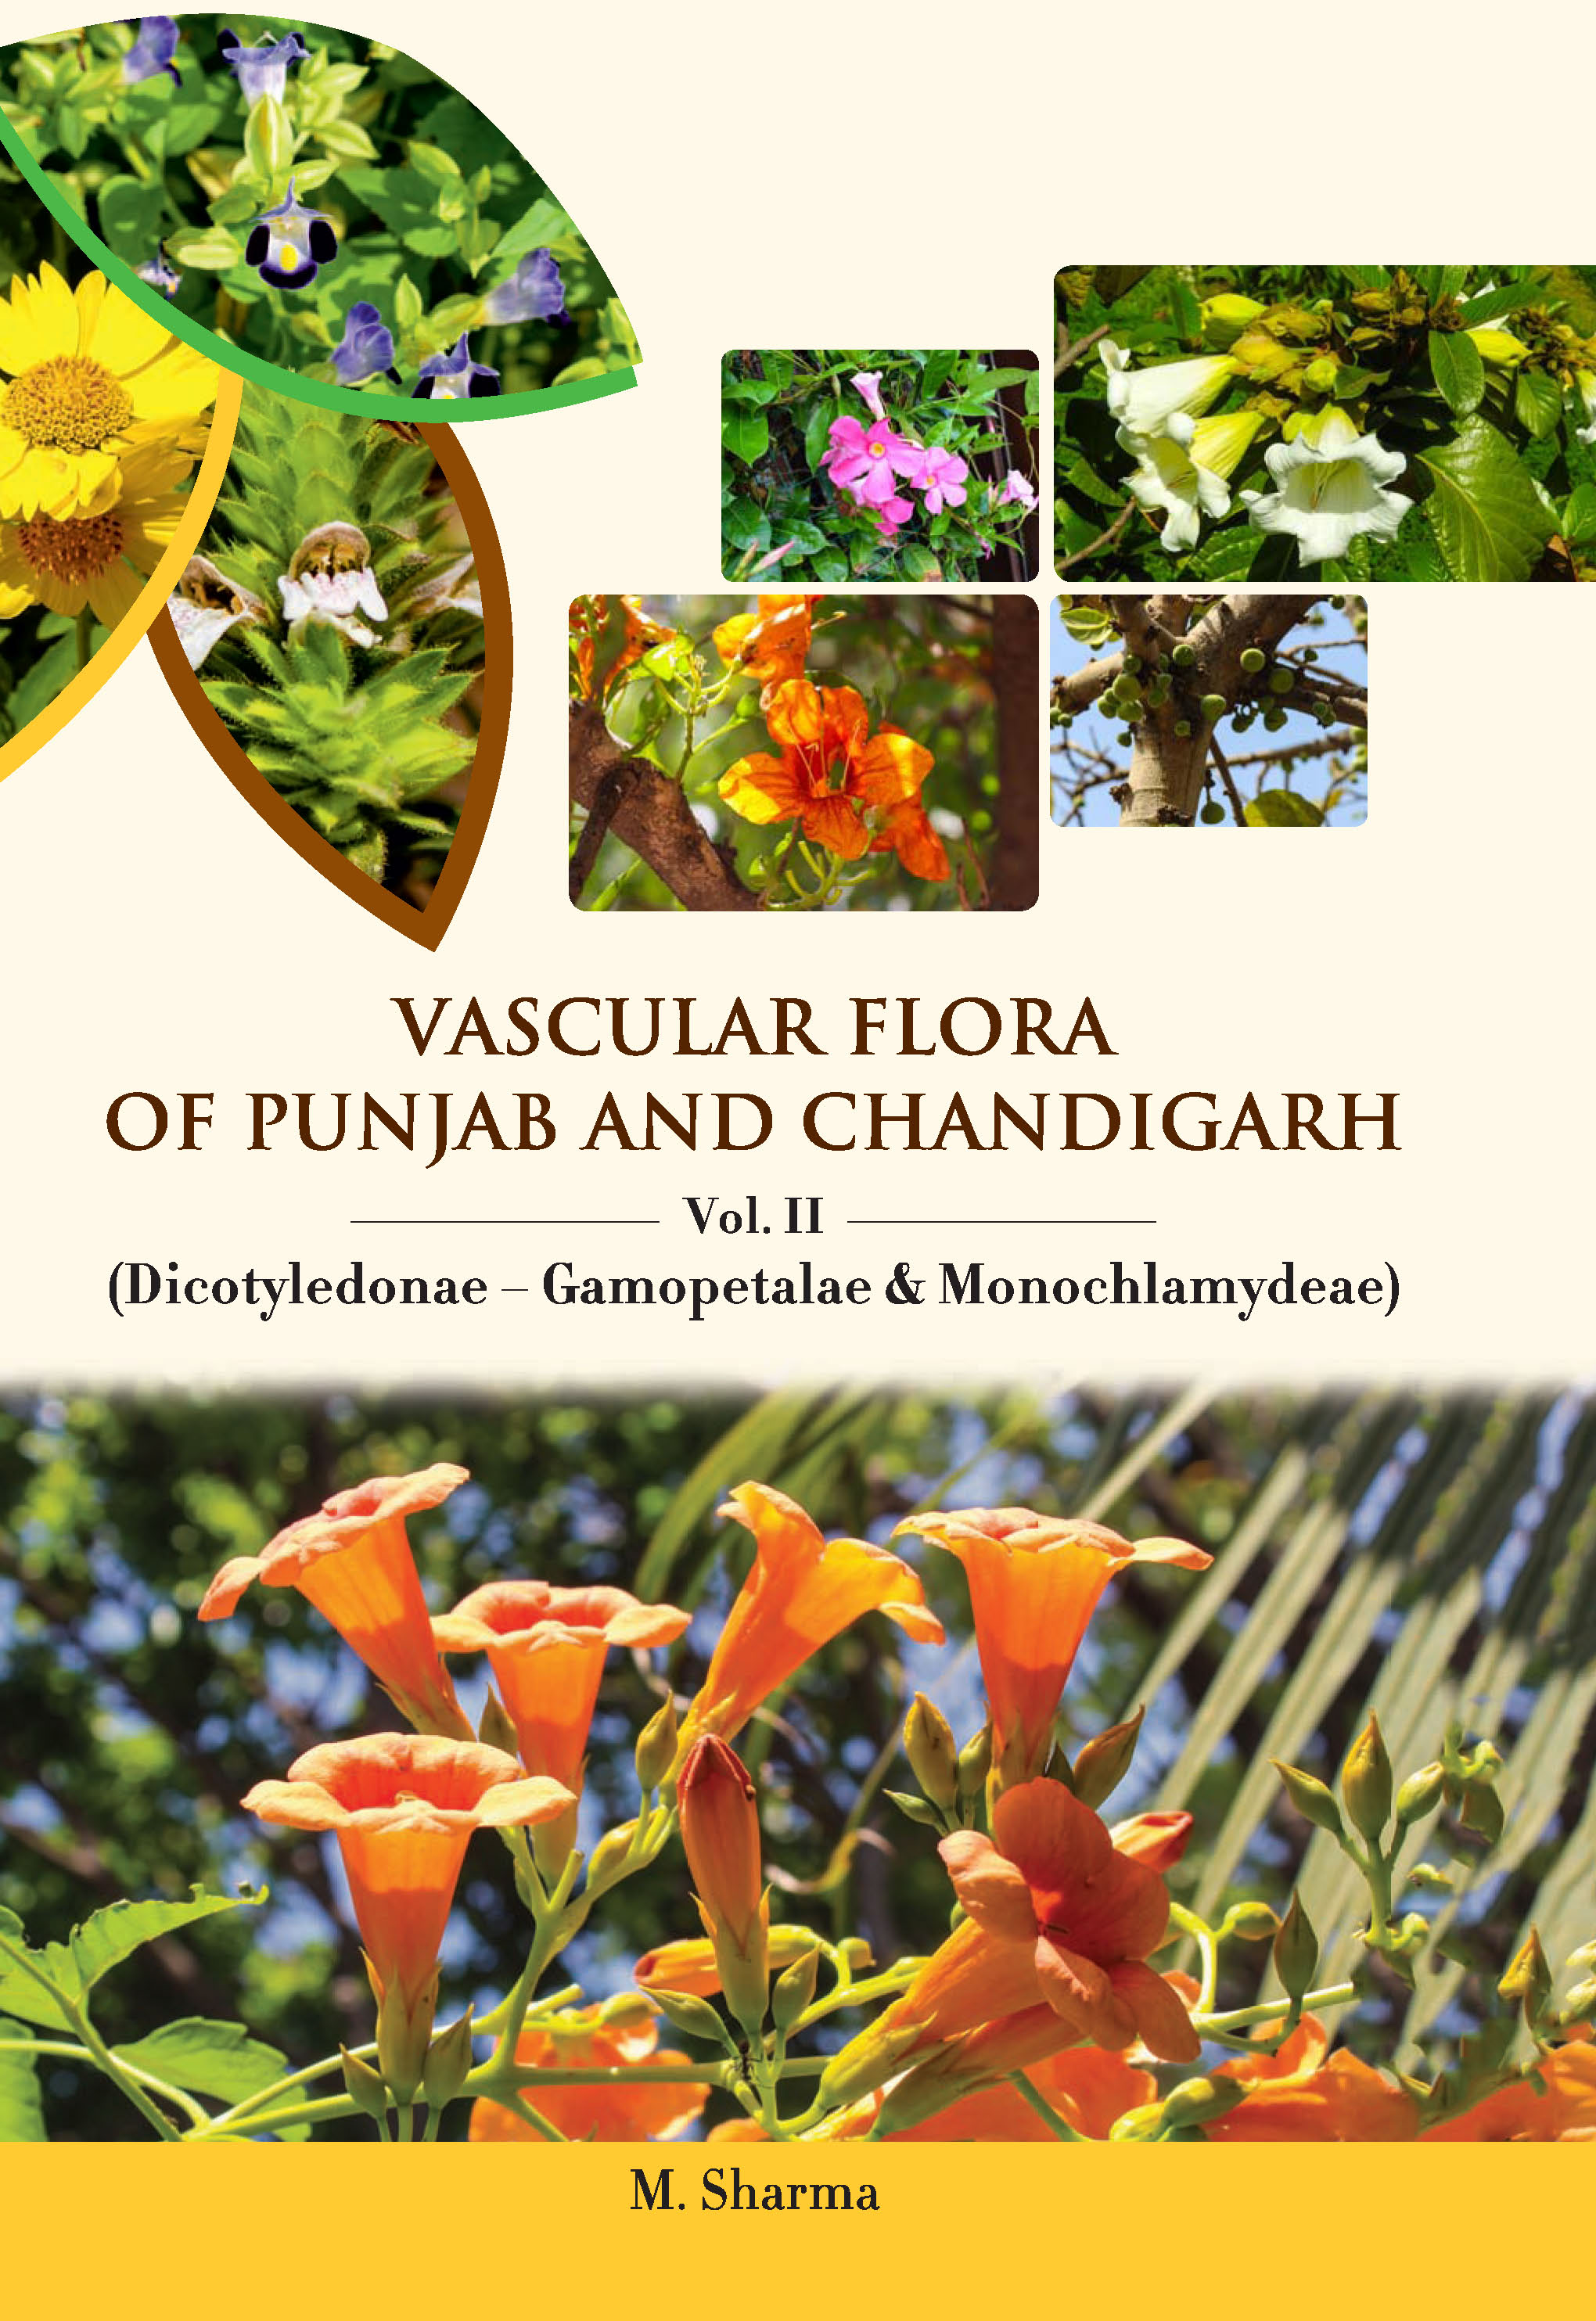 Vascular Flora of Punjaband Chandigarh Volume 2.jpg